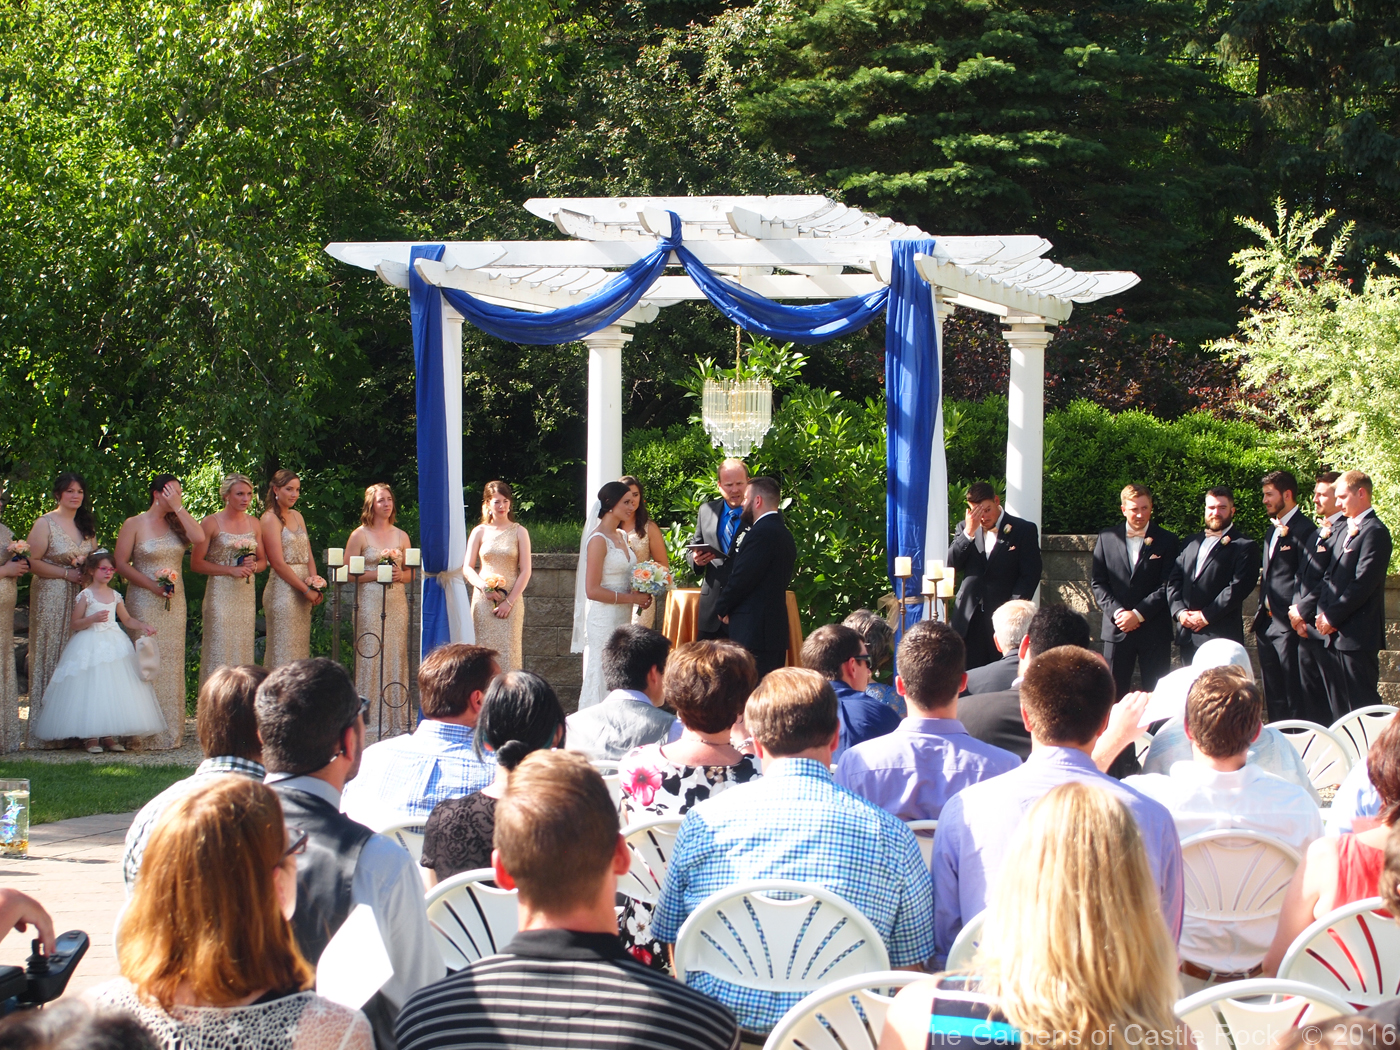 Carri & Sam at The Gardens of Castle Rock ~ Minnesota Garden Wedding - White Pergola on the Grand Promenade